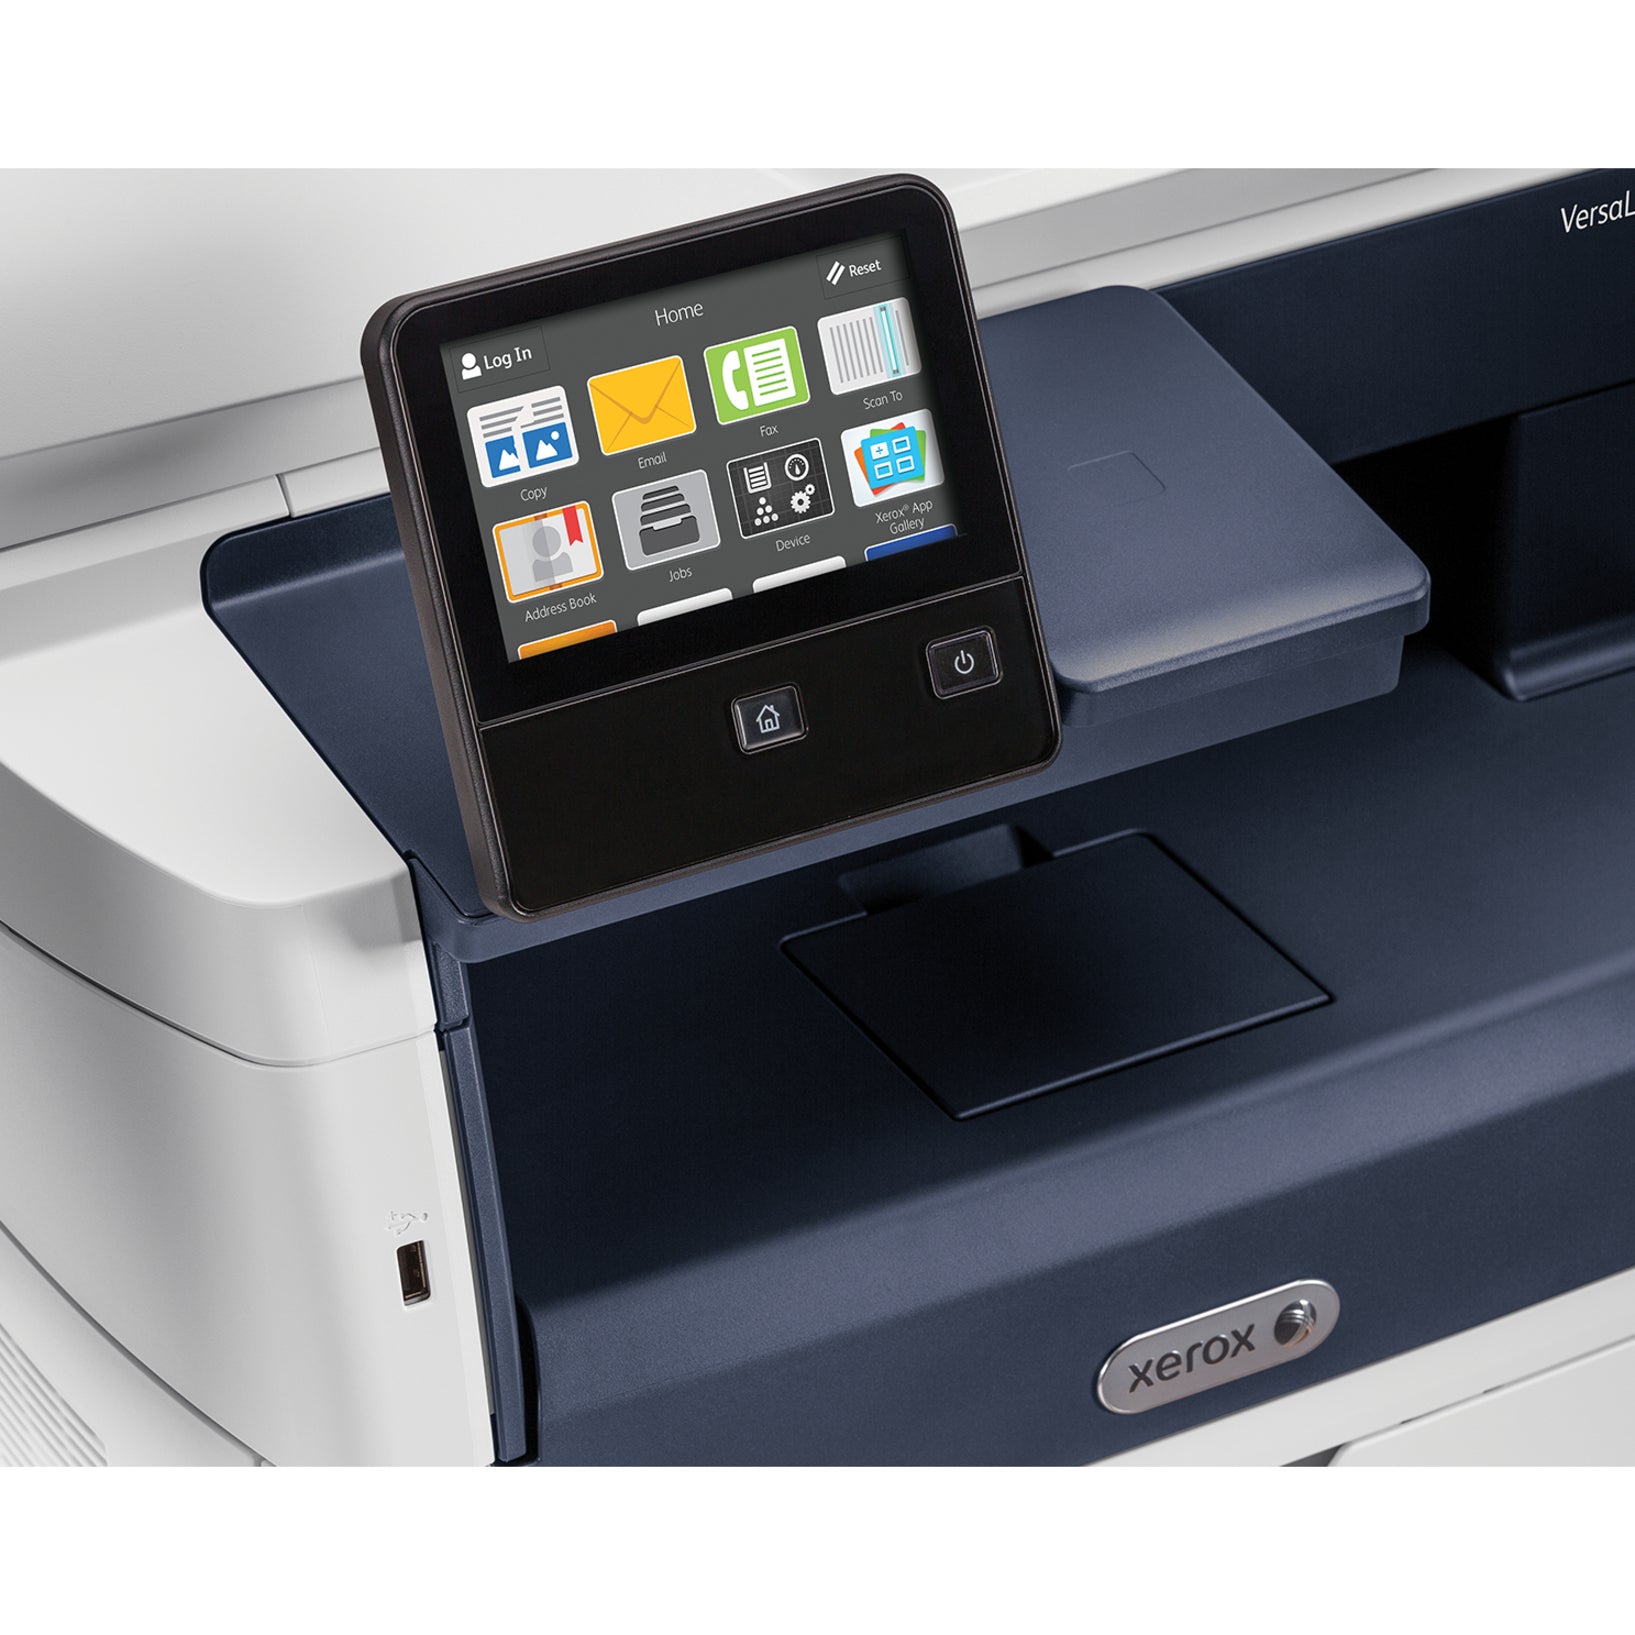 Xerox VersaLink B405 Laser Multifunction Printer [Discontinued]